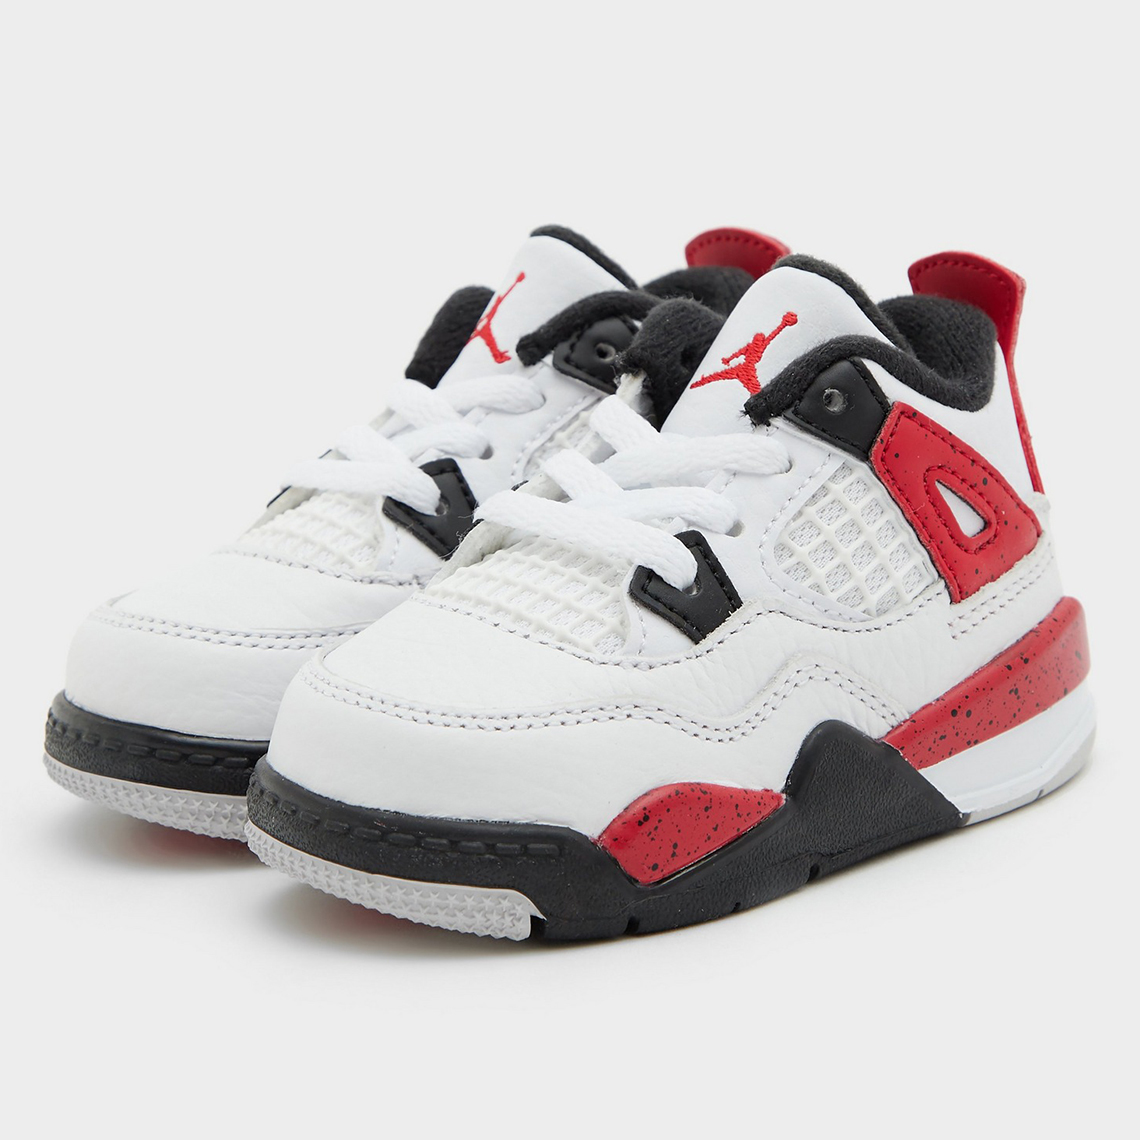 Jordan Retro 4 Bebes Chaussures Td Red Cement Bq7670 161 5